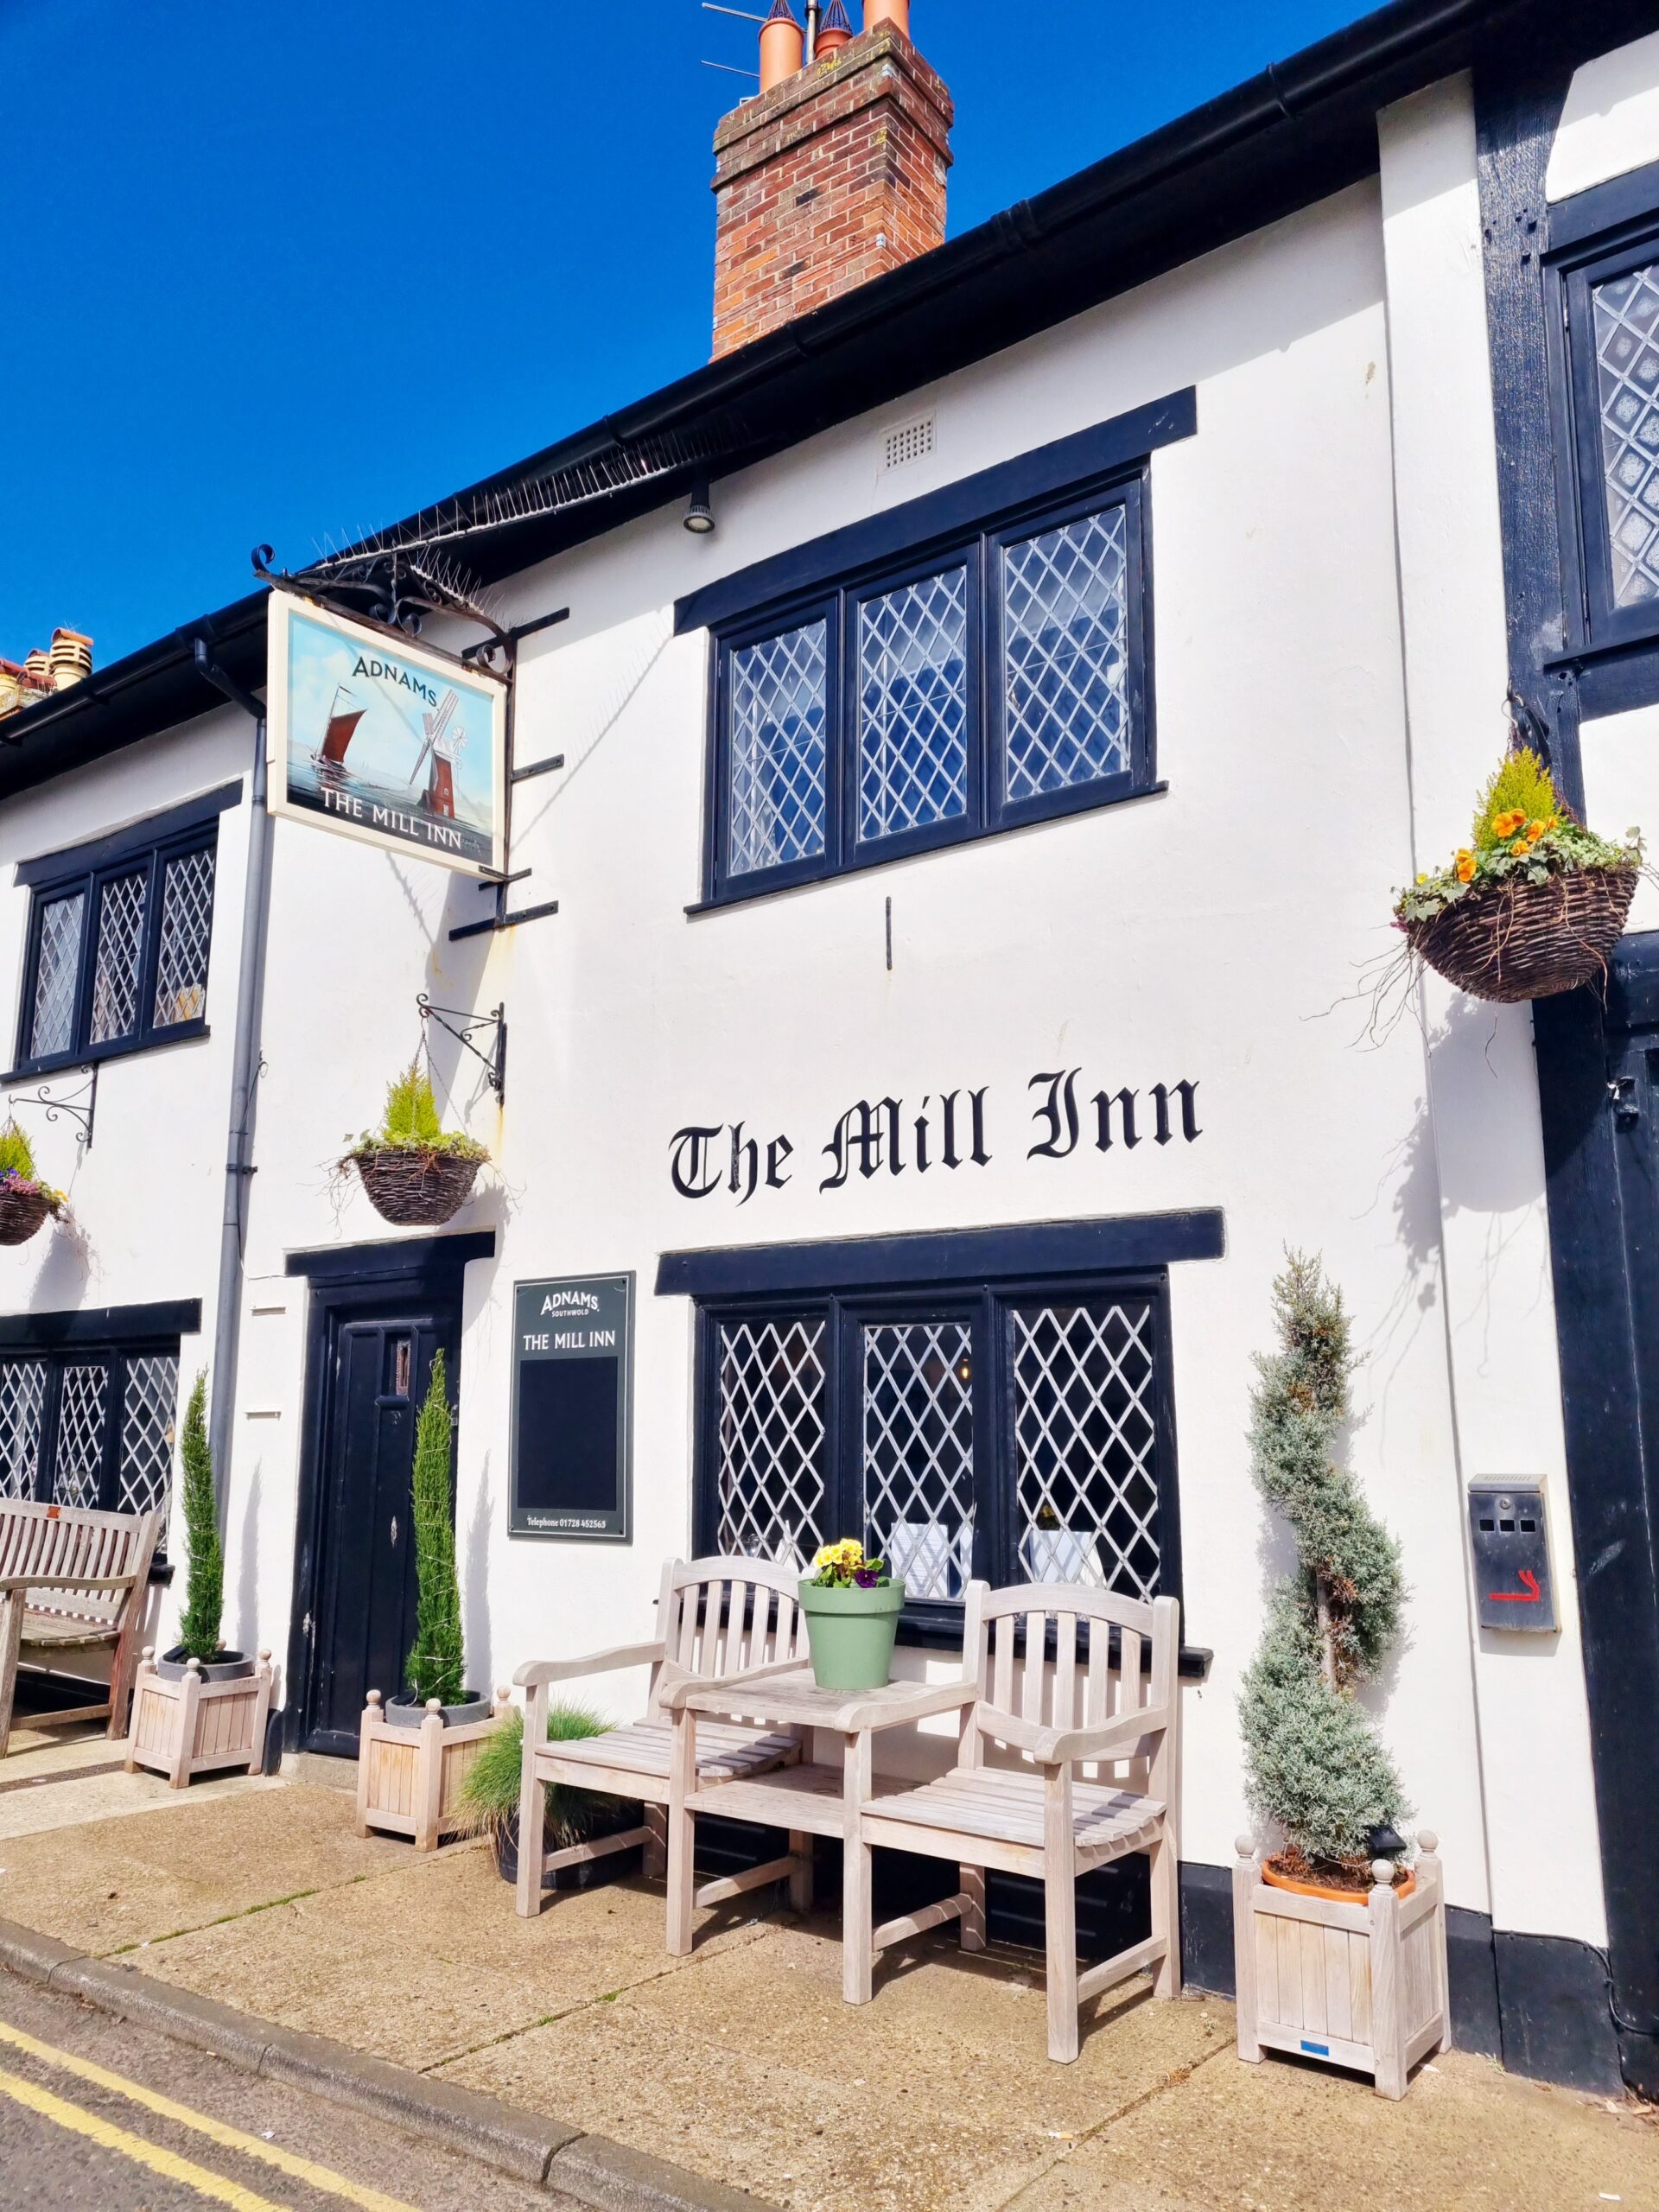 <img src="mill.jpg" alt="mill inn pub in Aldeburgh"/>